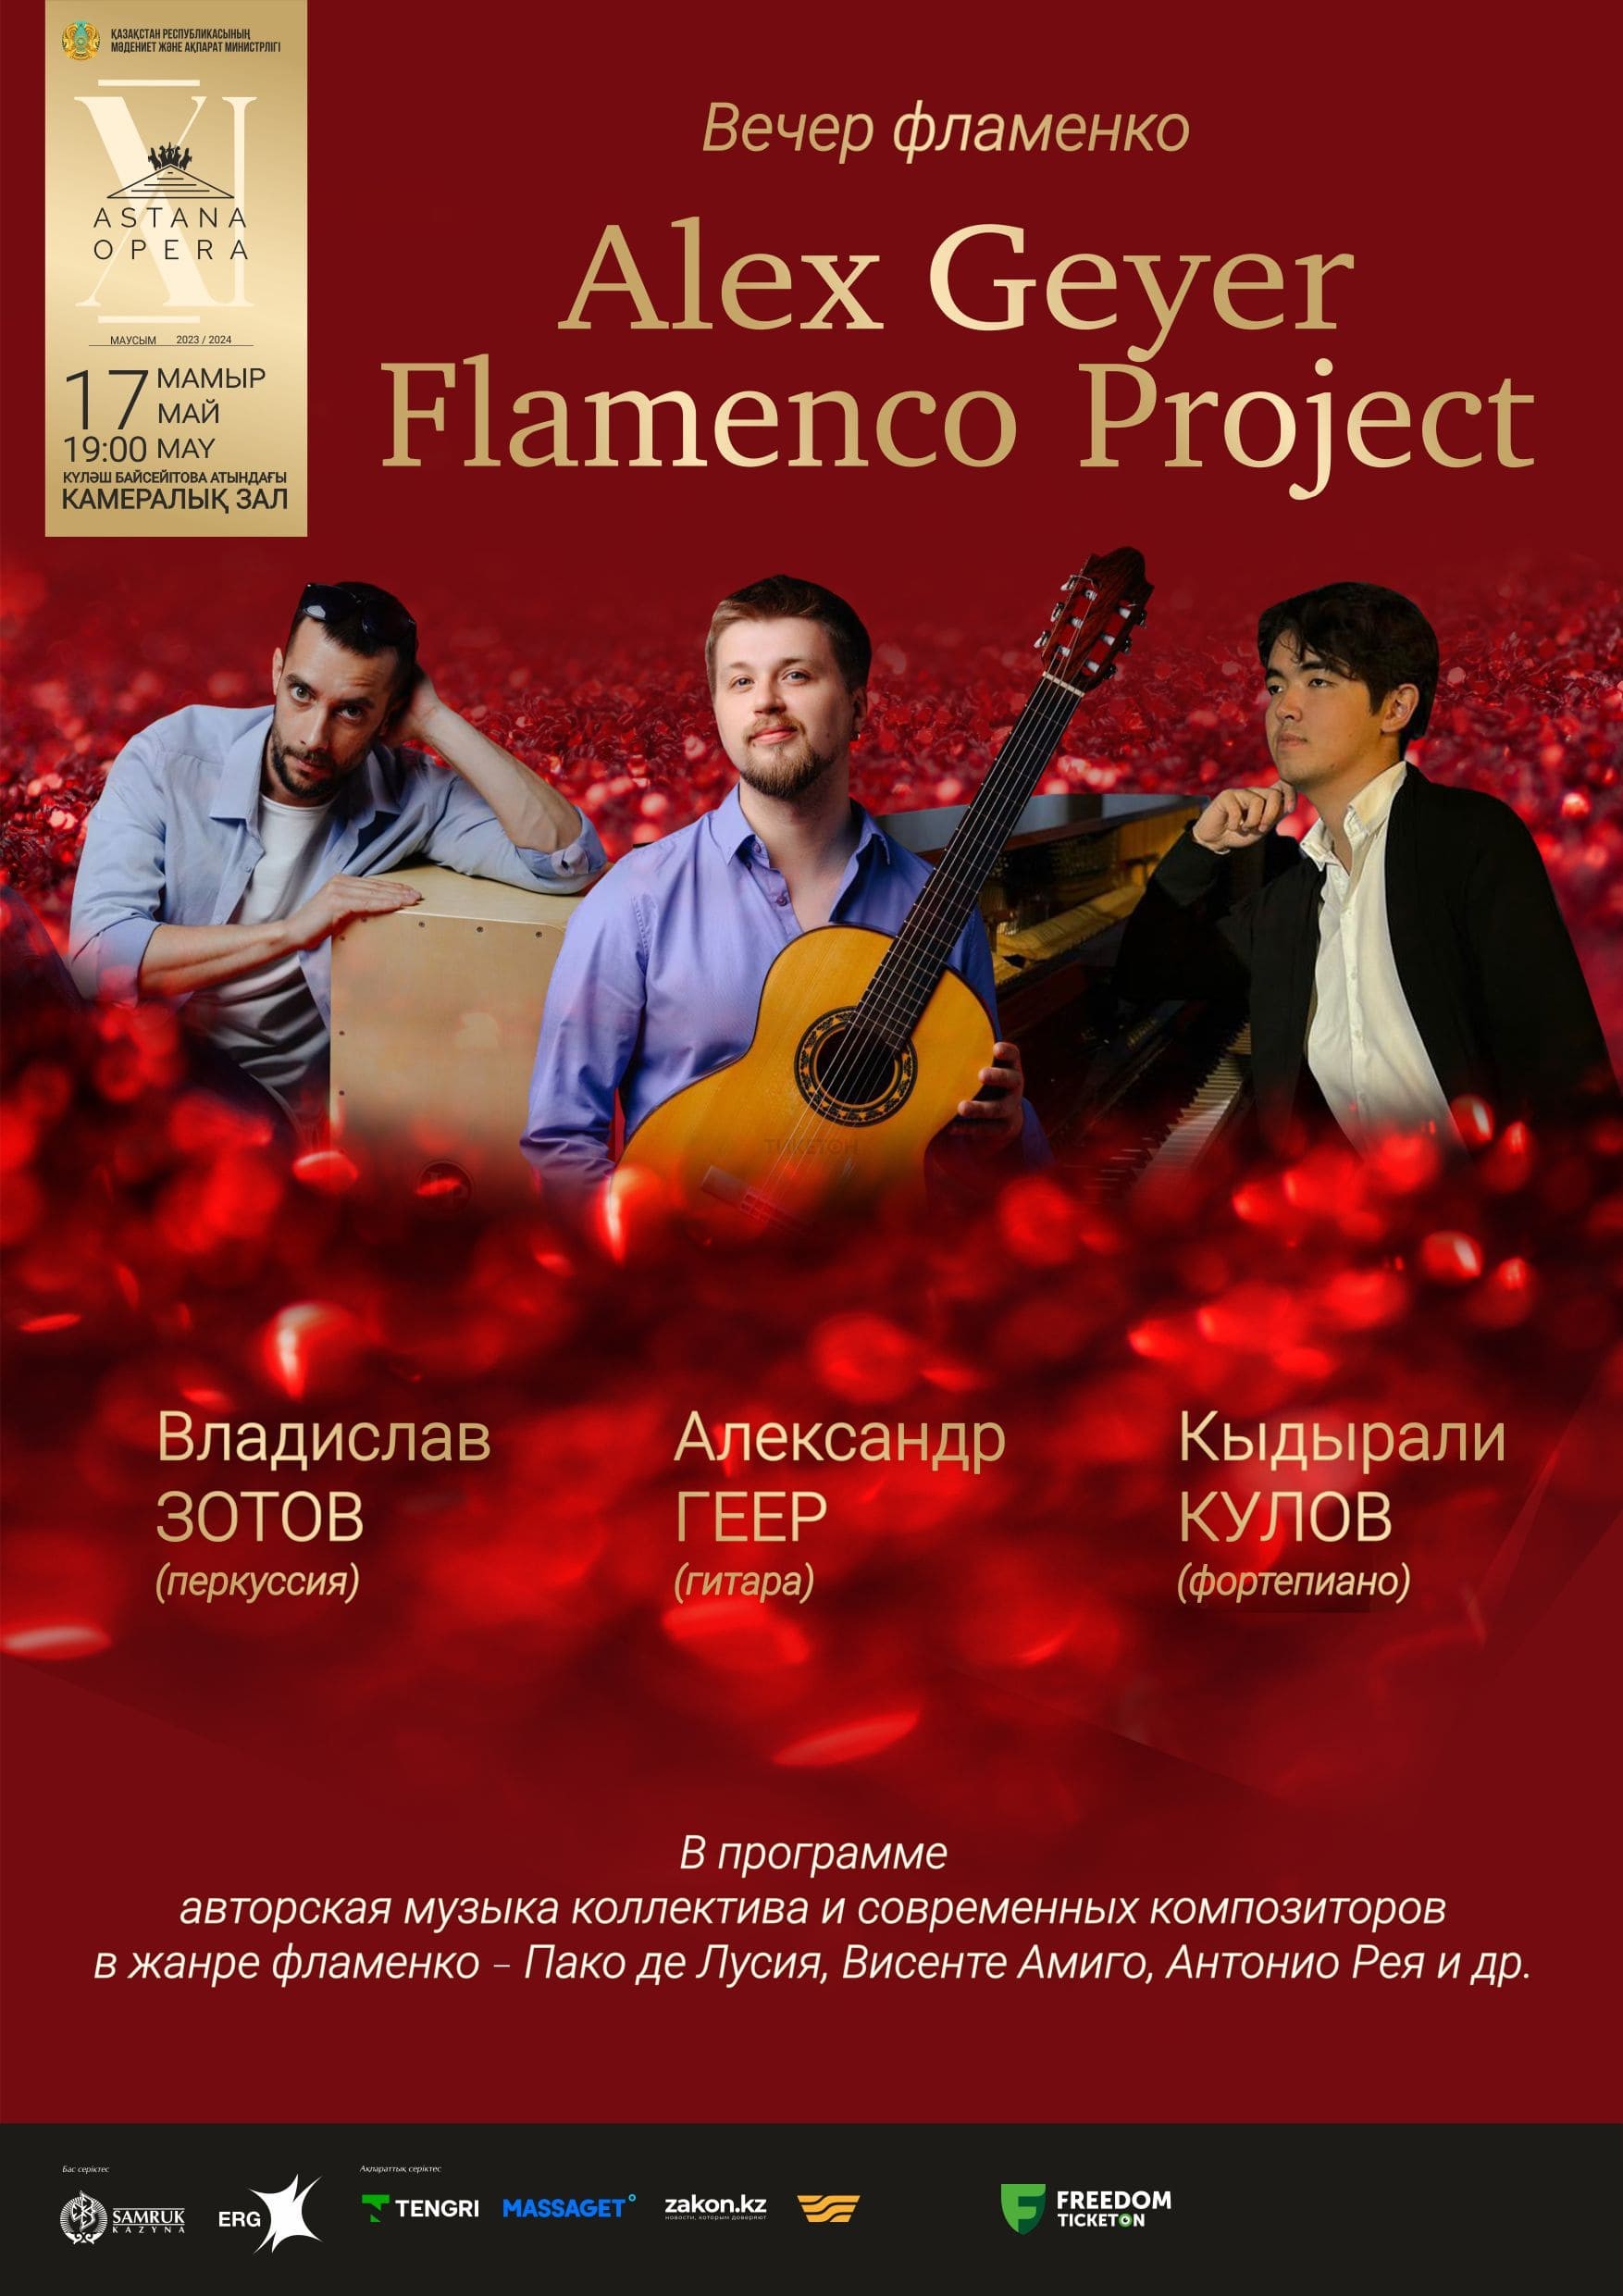 Вечер фламенко  Аlex Geyer flamenco project (AstanaOpera)